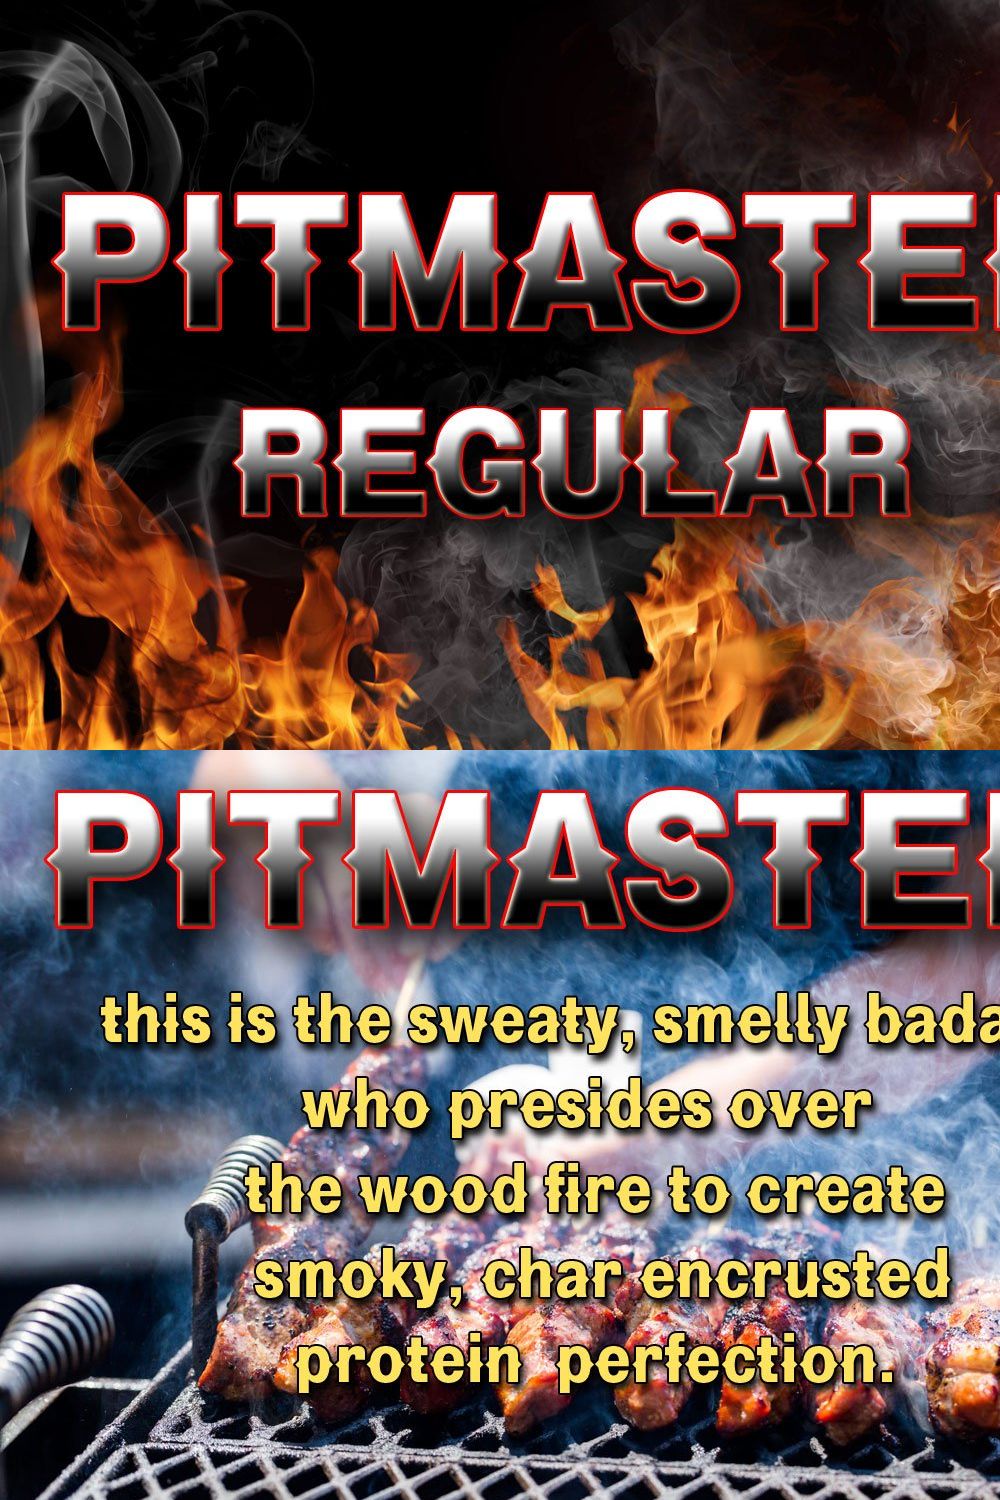 Pitmaster Regular pinterest preview image.